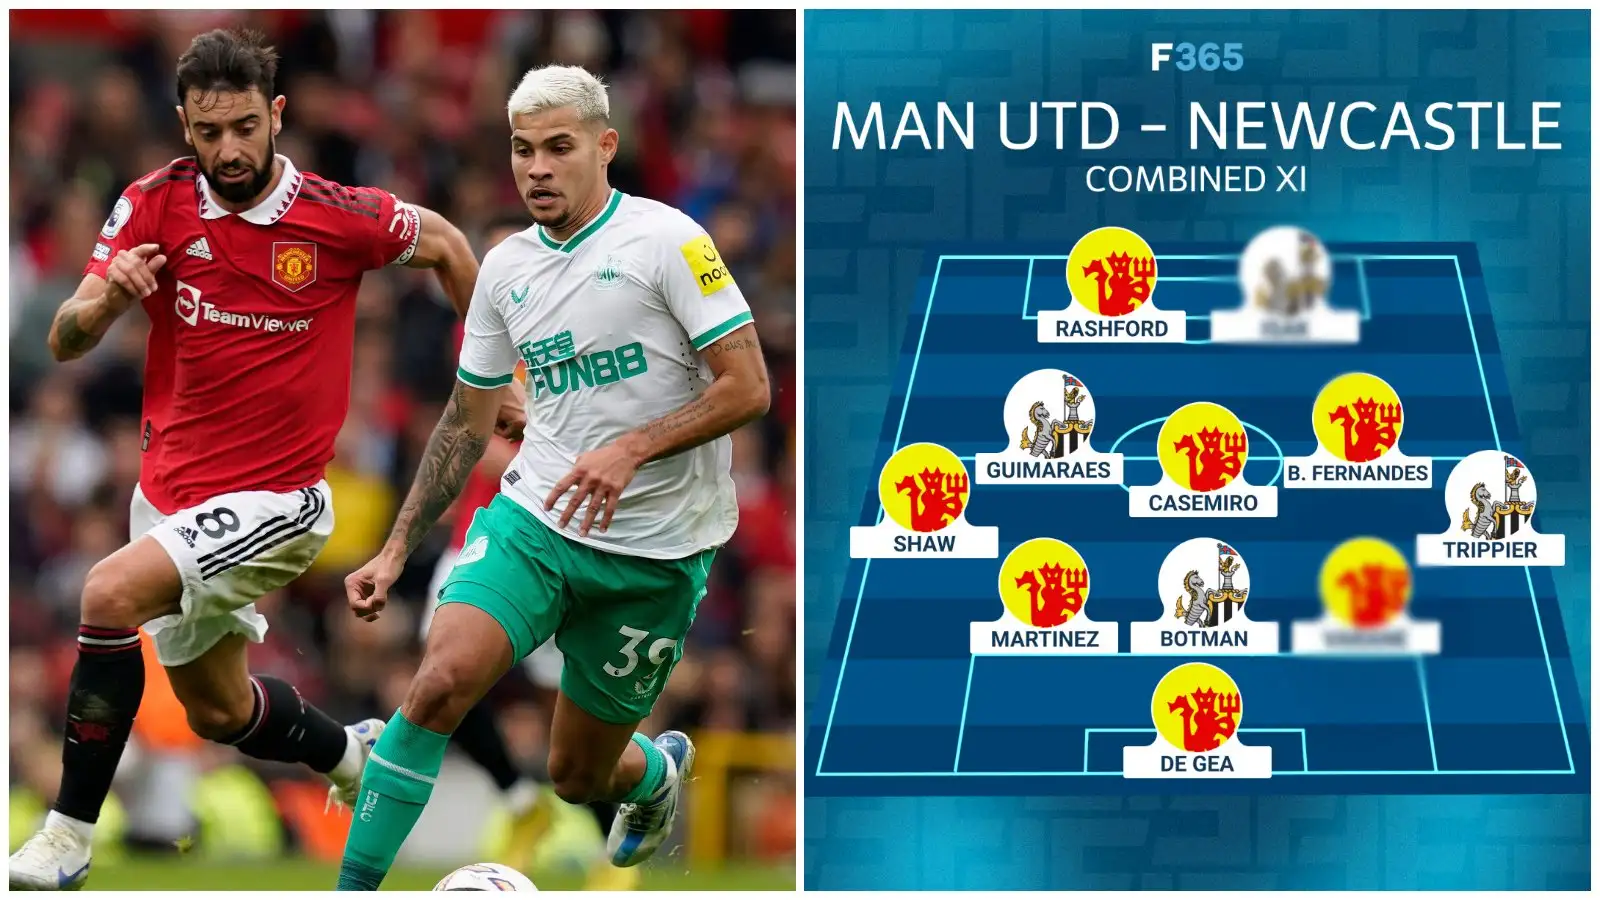 Man Utd - Newcastle combined XI